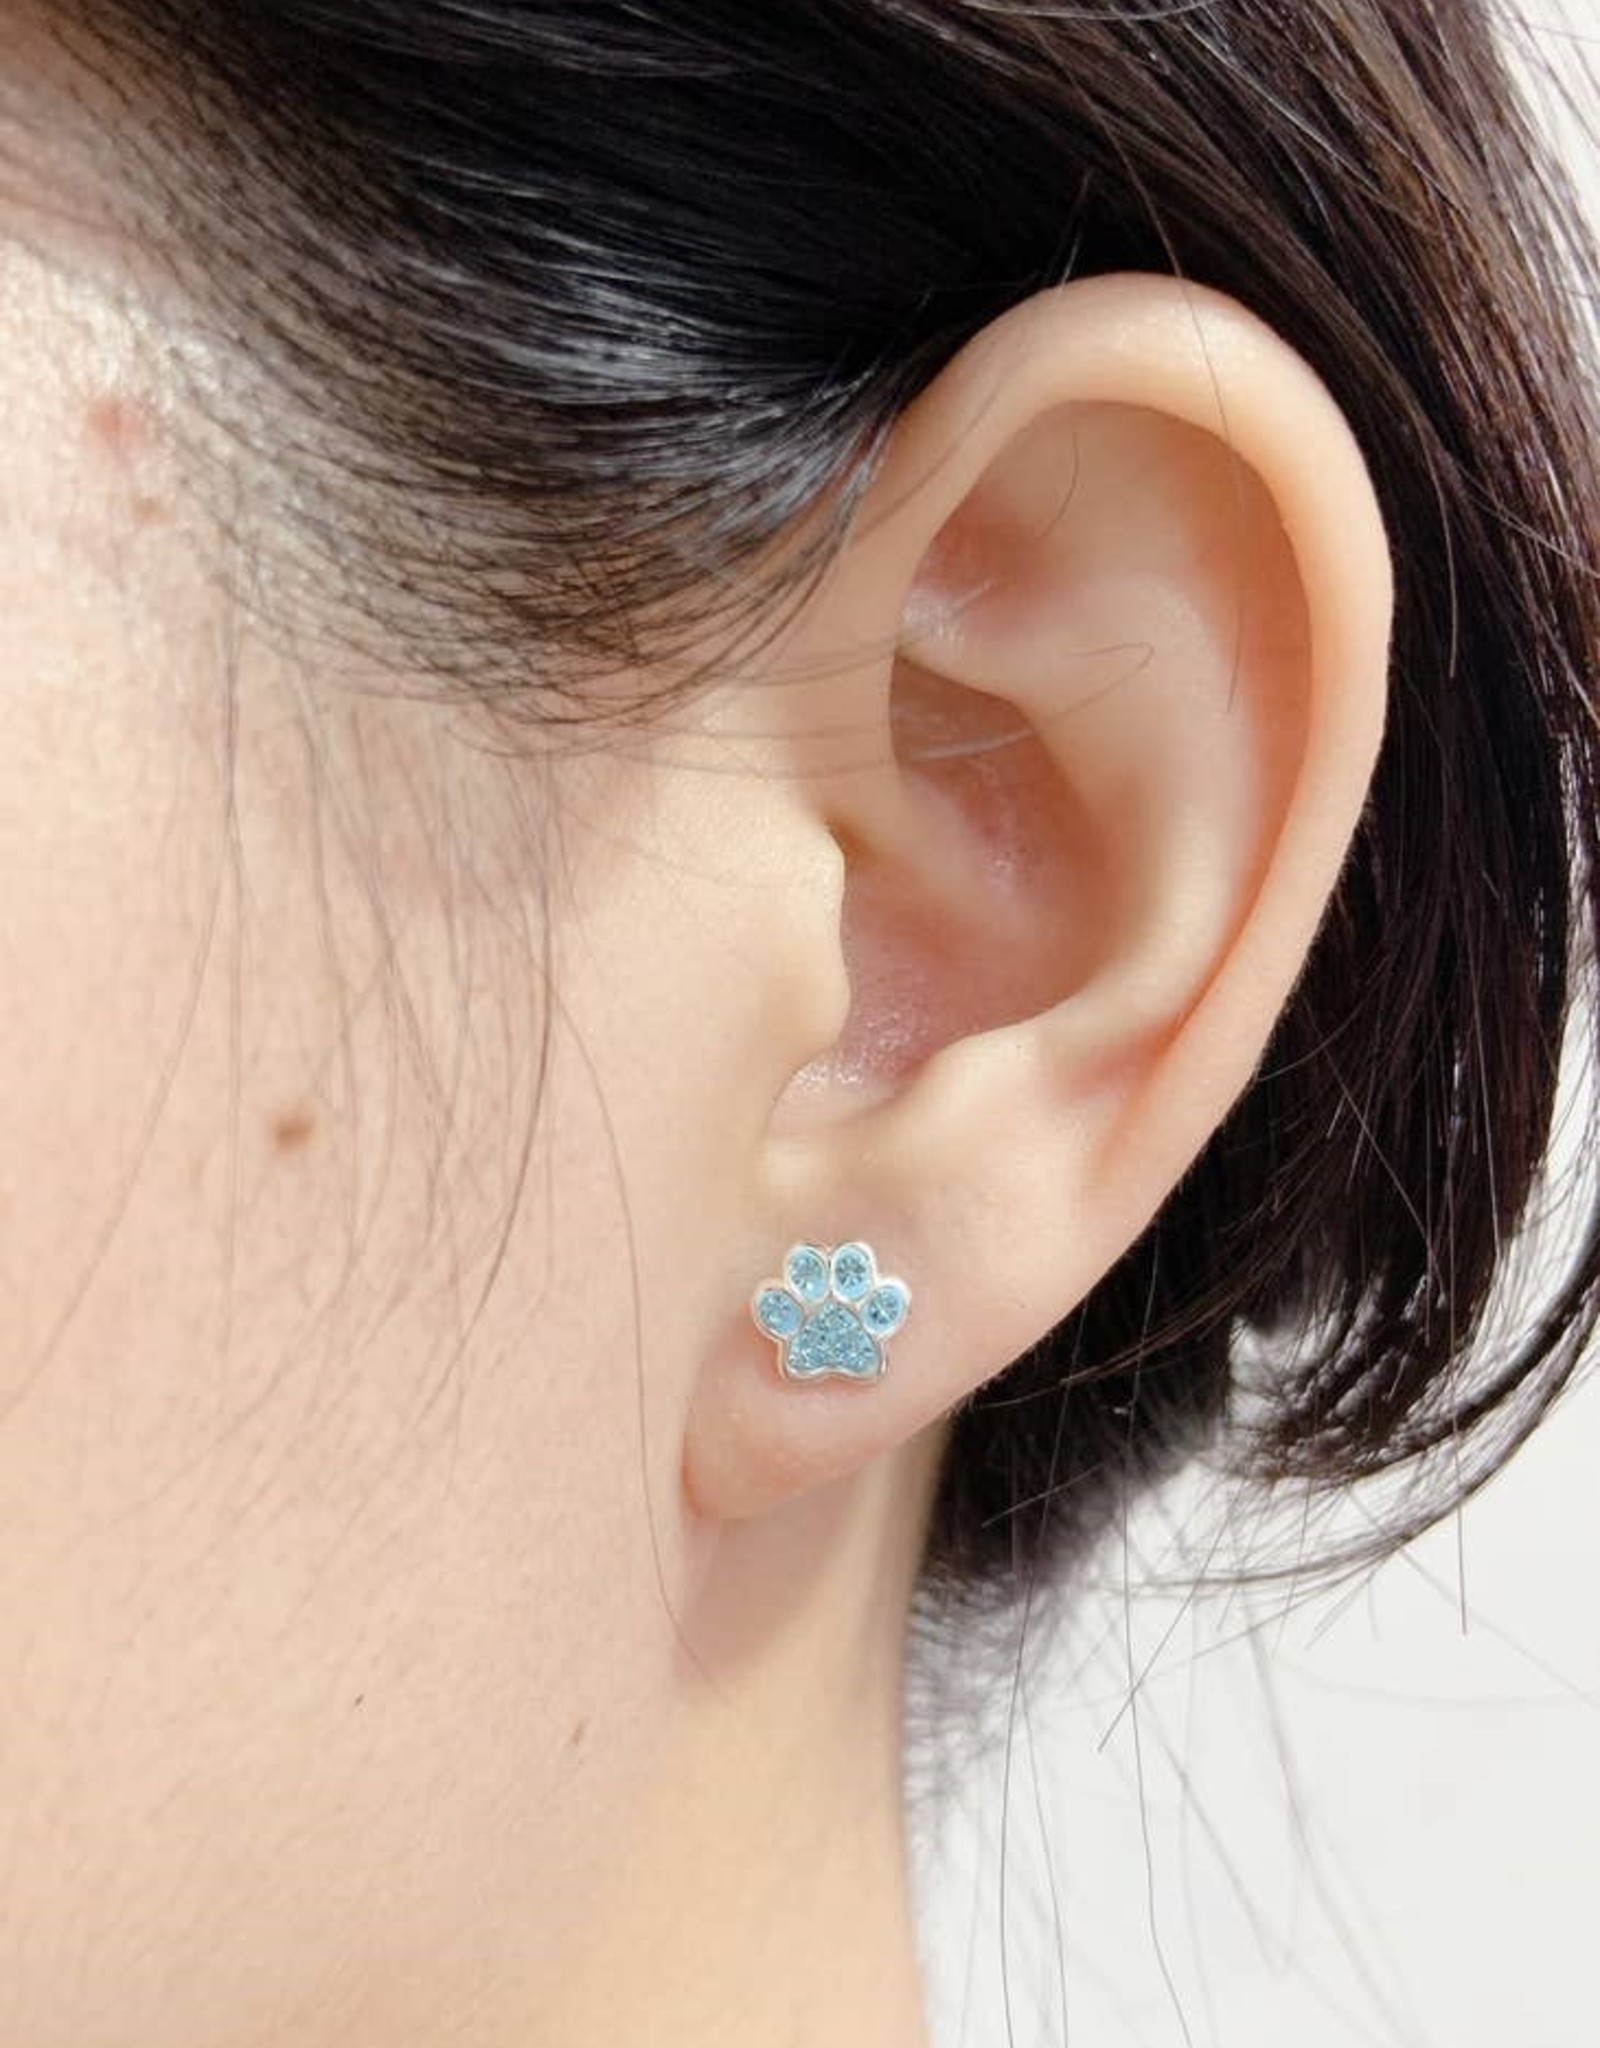 Zoey Simmons Sterling Silver & Blue Crystal Paw Print Stud Earrings